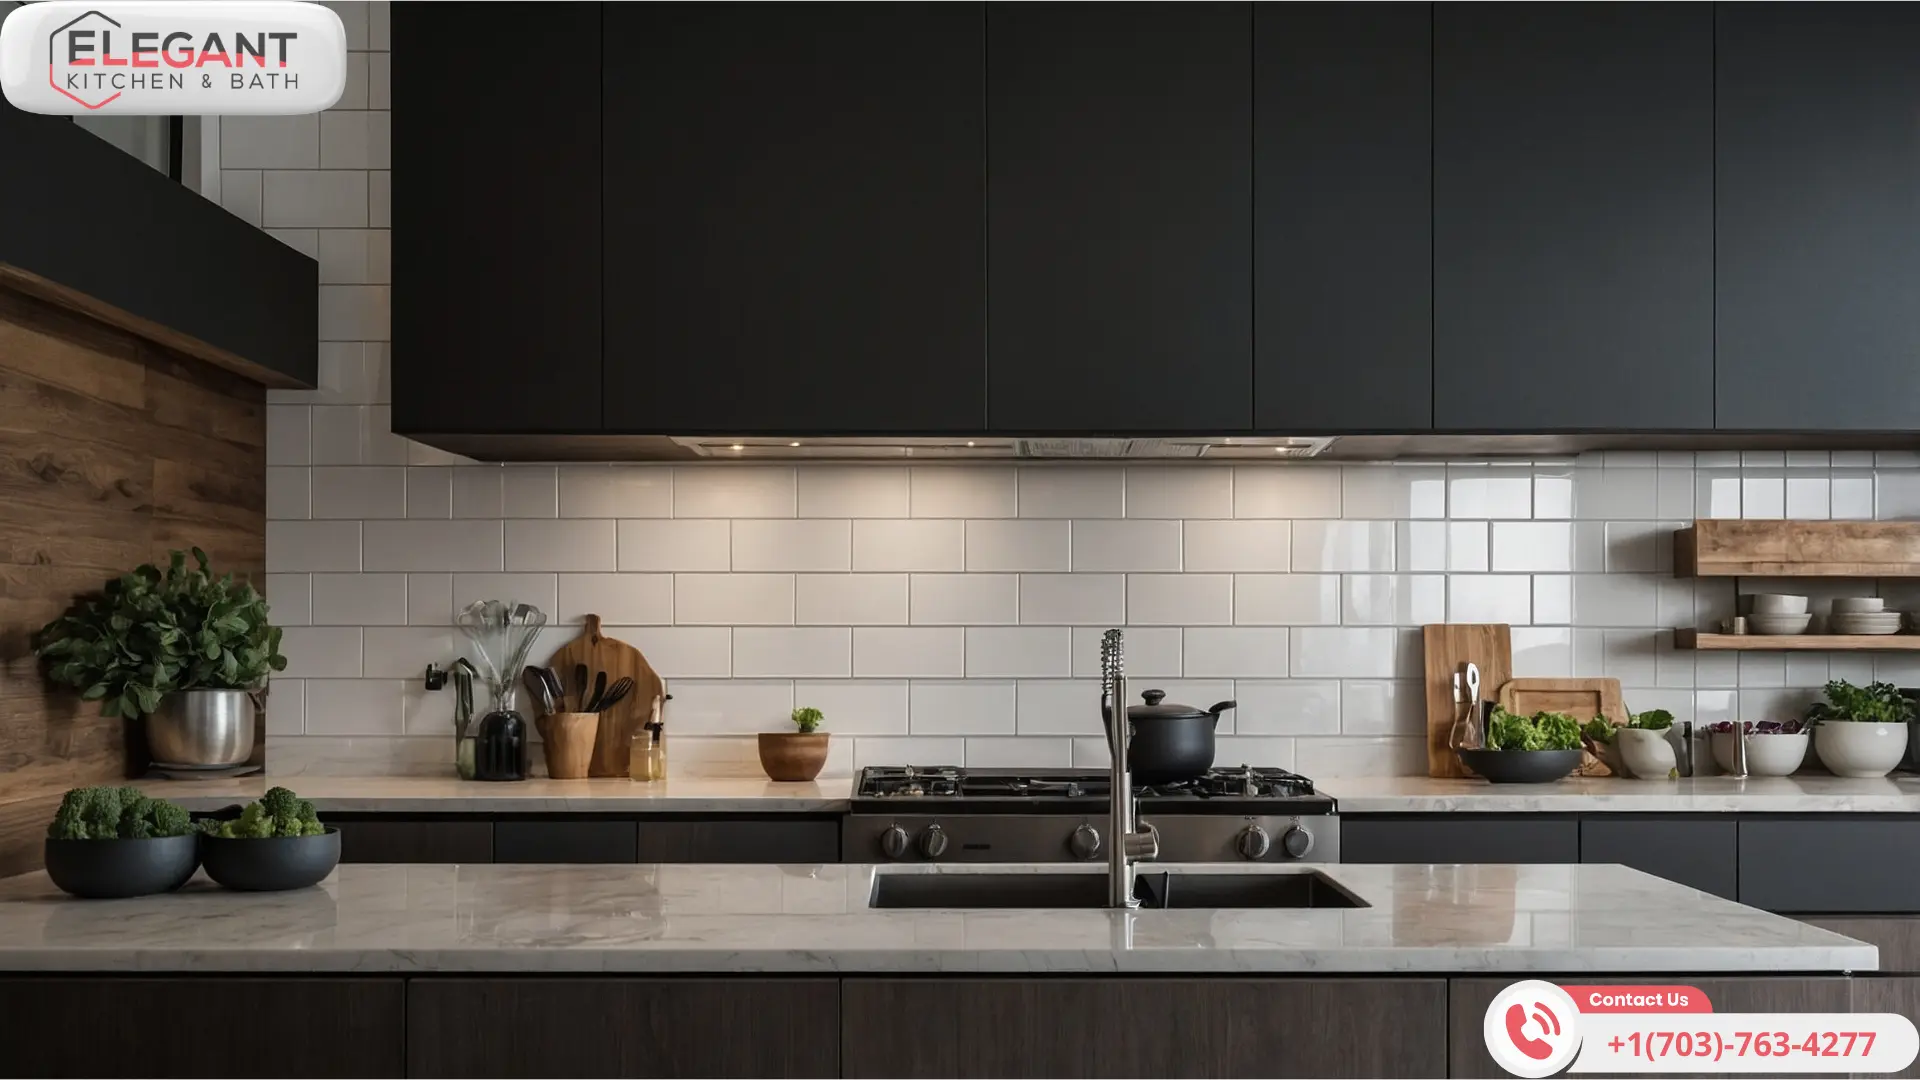 Kitchen-Backsplash-Tiles-Subway-Tile-Backsplash-with-Elegant-Kitchen-and-Bath-Herndon-Virginia